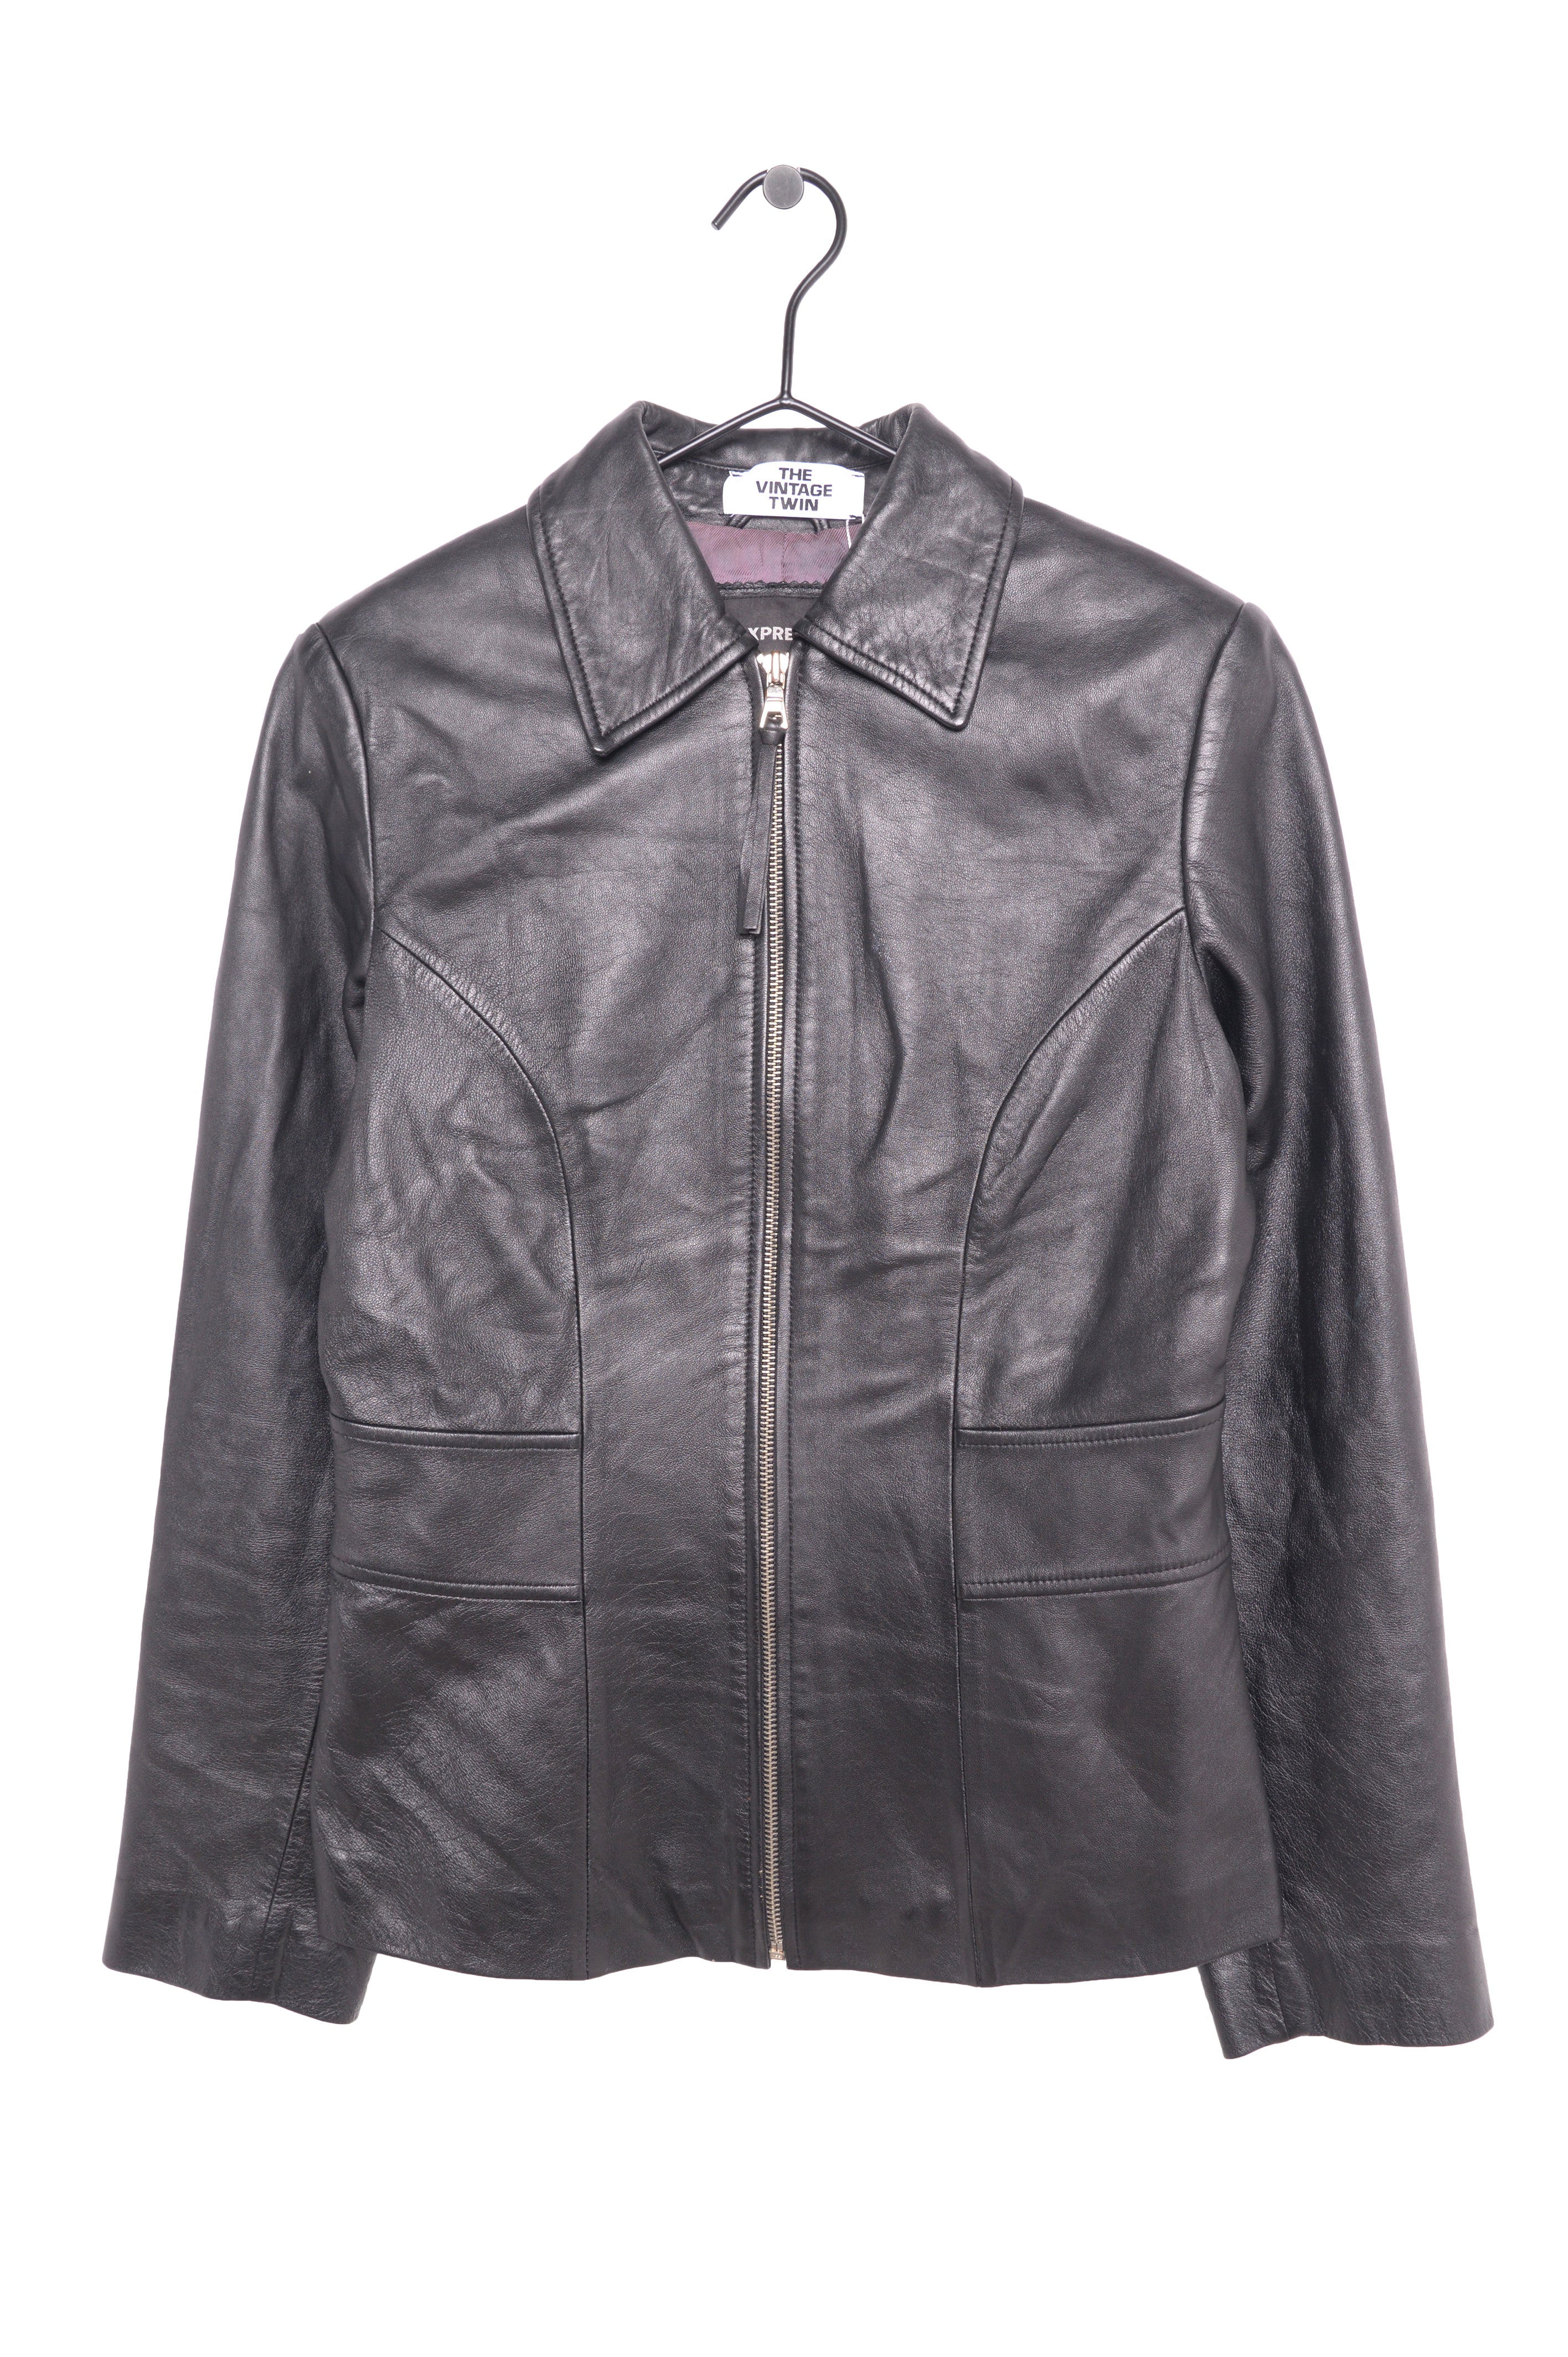 Vintage Leather jacket made in Japan y2k